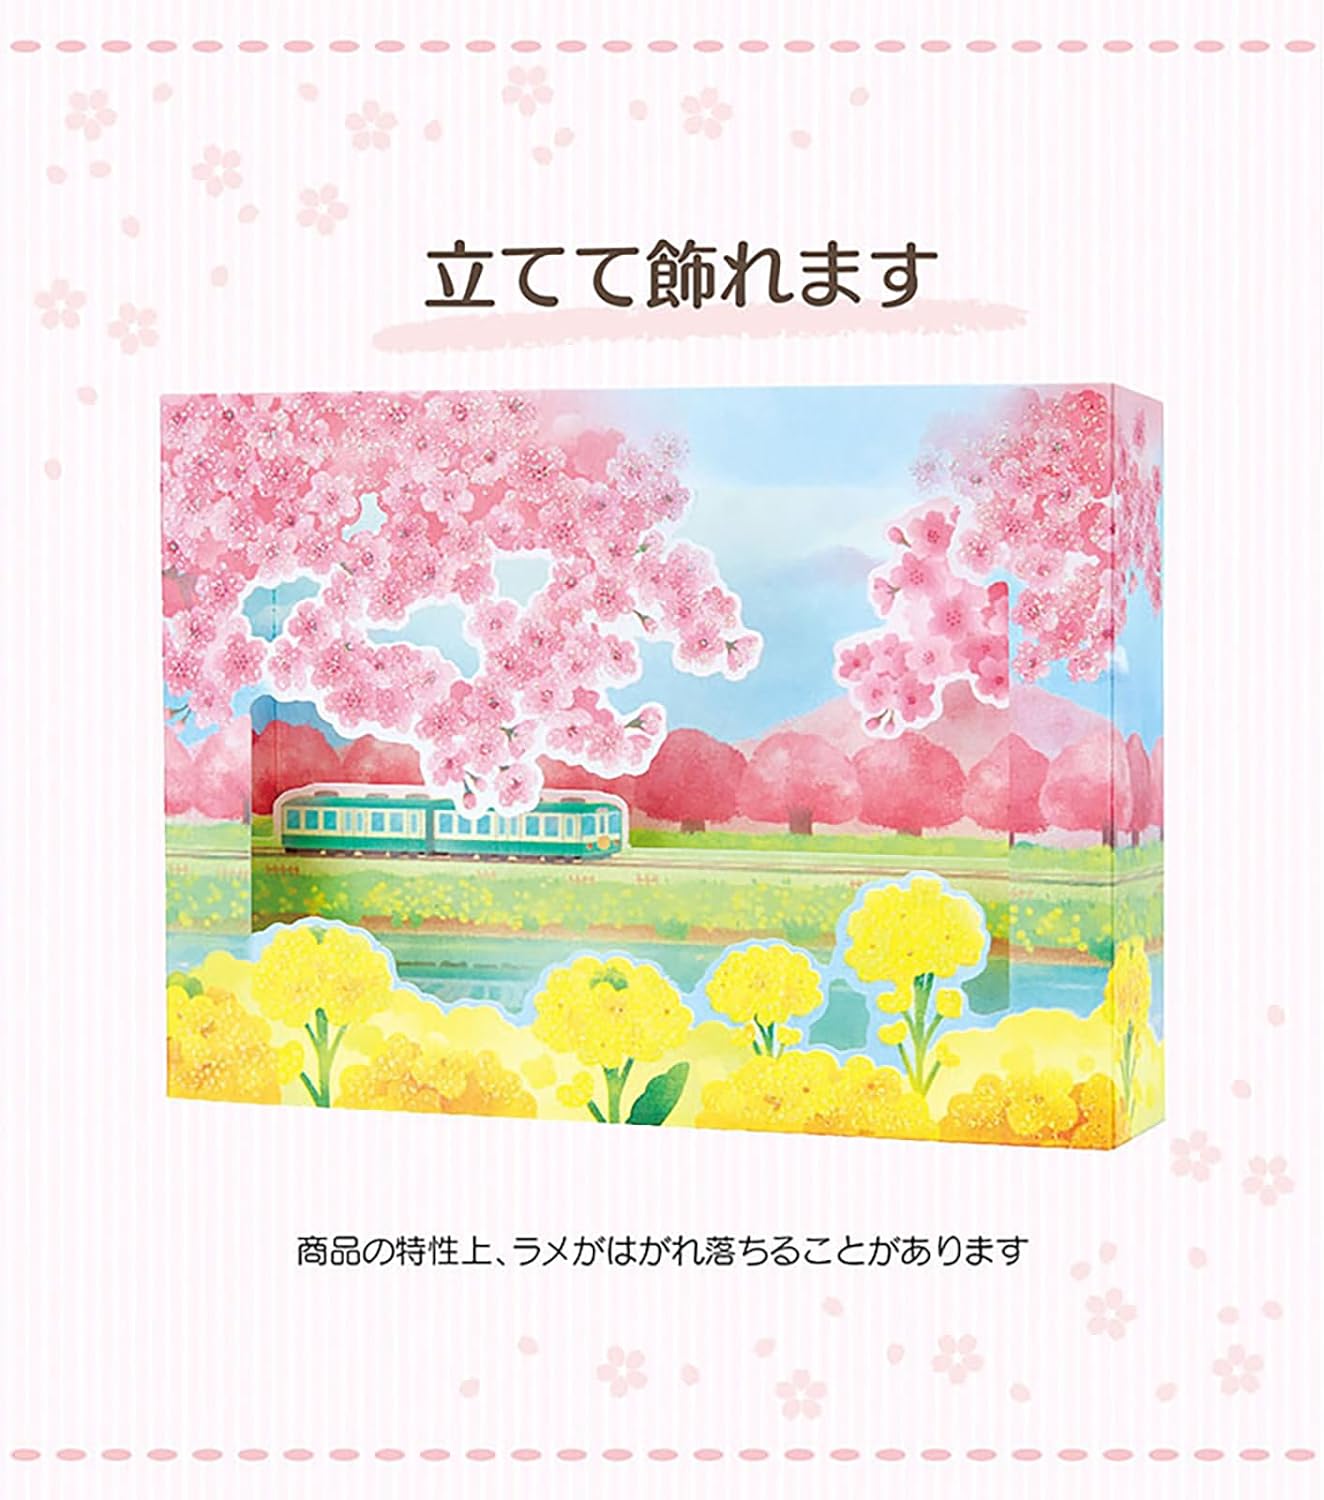 Sanrio Greeting Card: Sakura Train